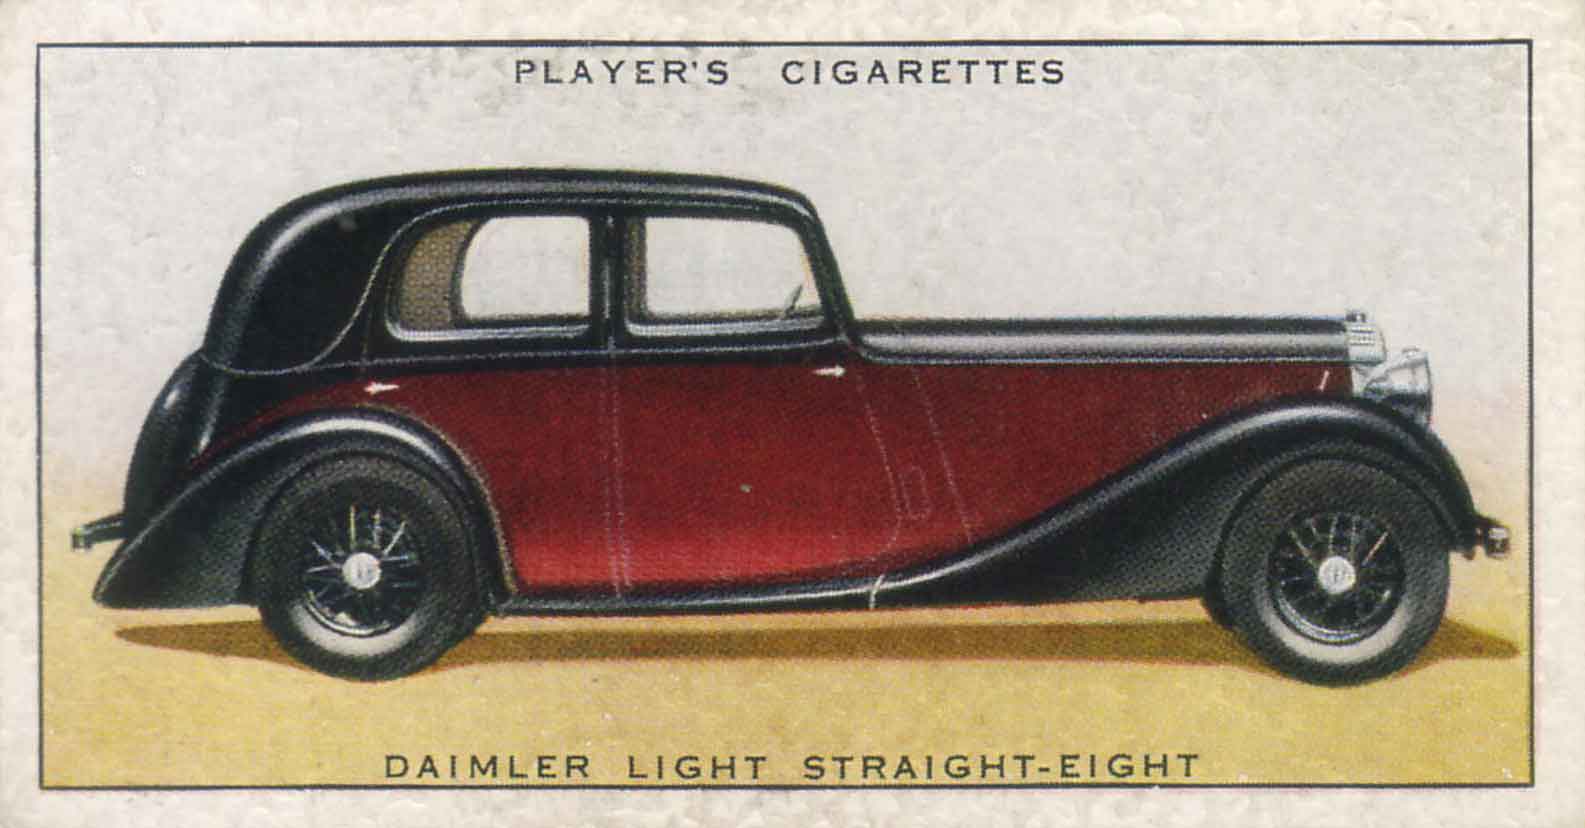 Daimler Light Straight-Eight. 1937 cigarette card.